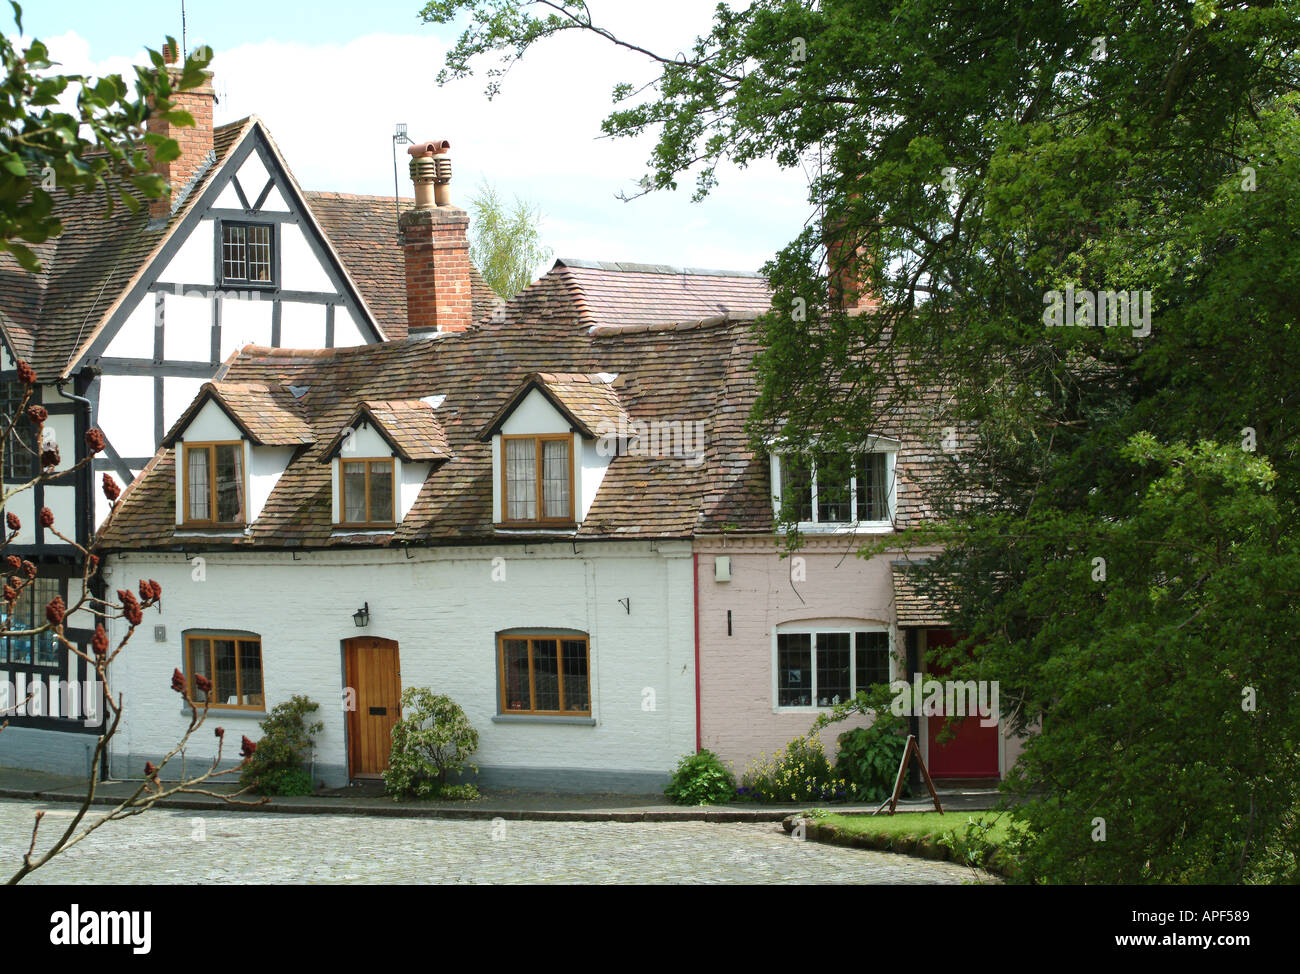 Typical English Cottage In Warwick Warwickshire England United